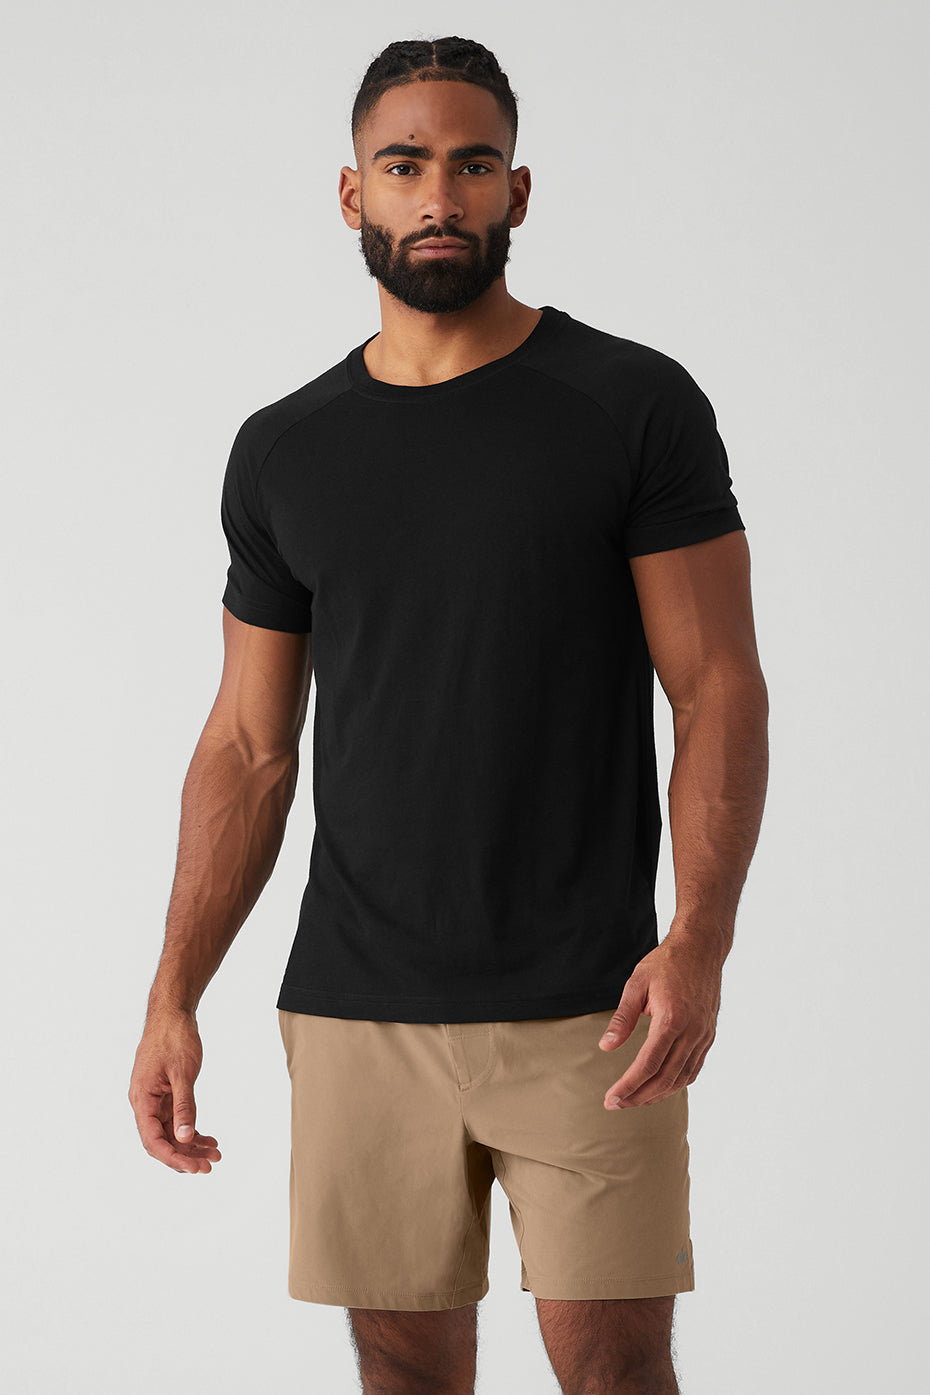 Alo Yoga Men's Warrior Compression Short, Jet Black, Medium at  Men's  Clothing store